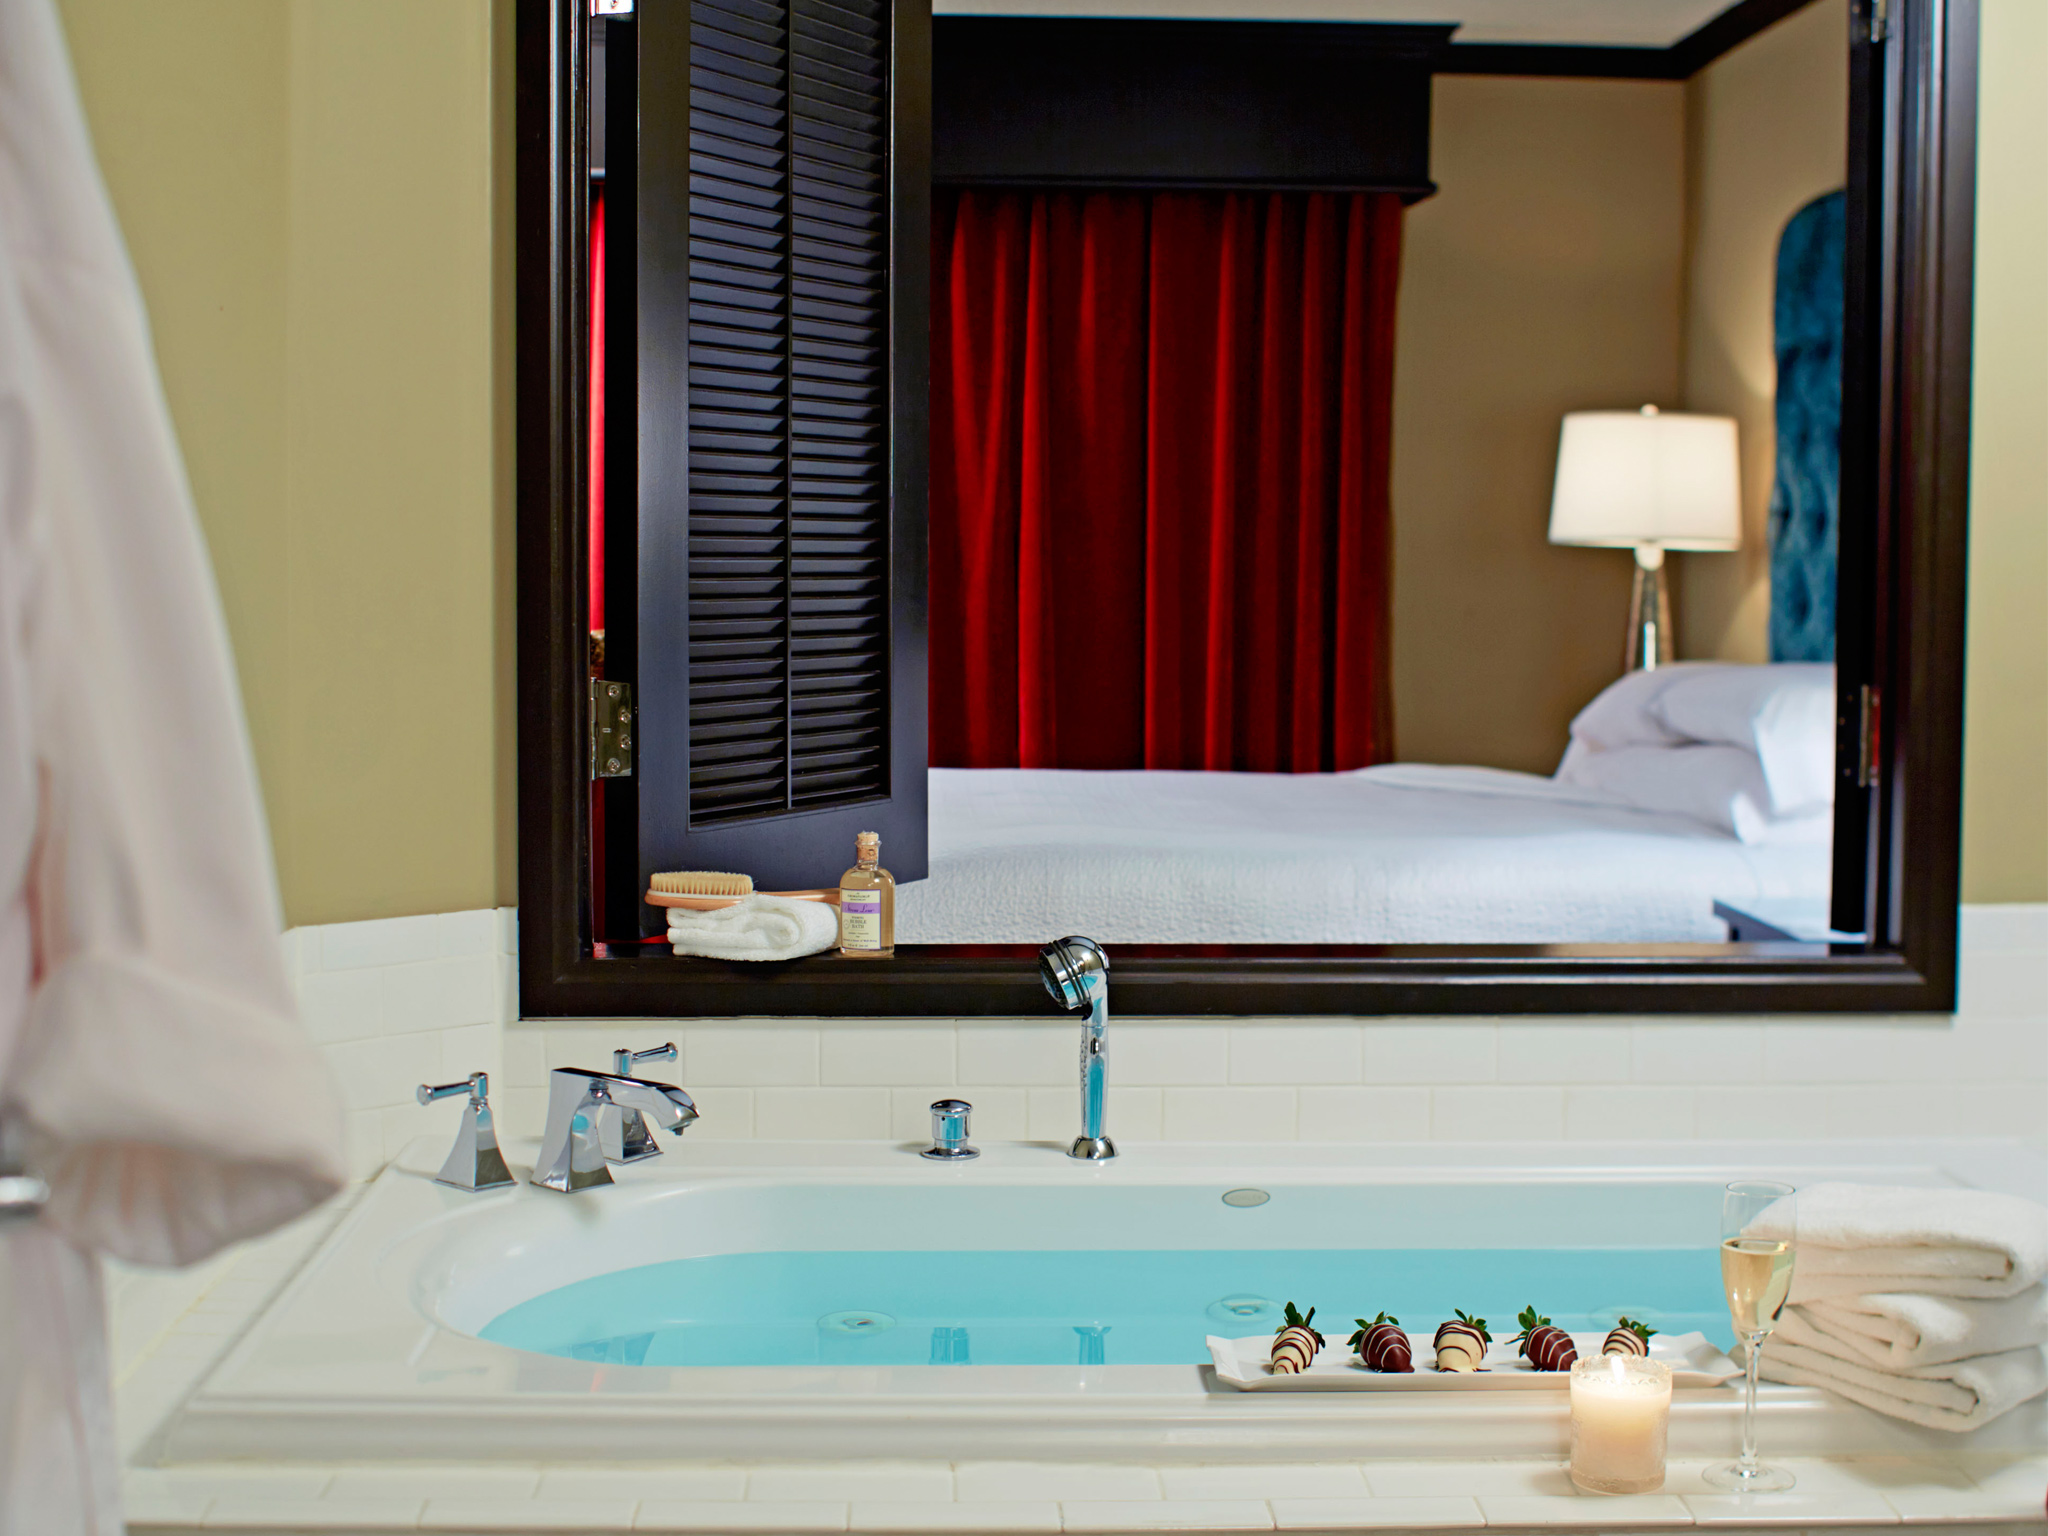 Grand Bohemian Hotel Orlando: Refreshing and Refined.